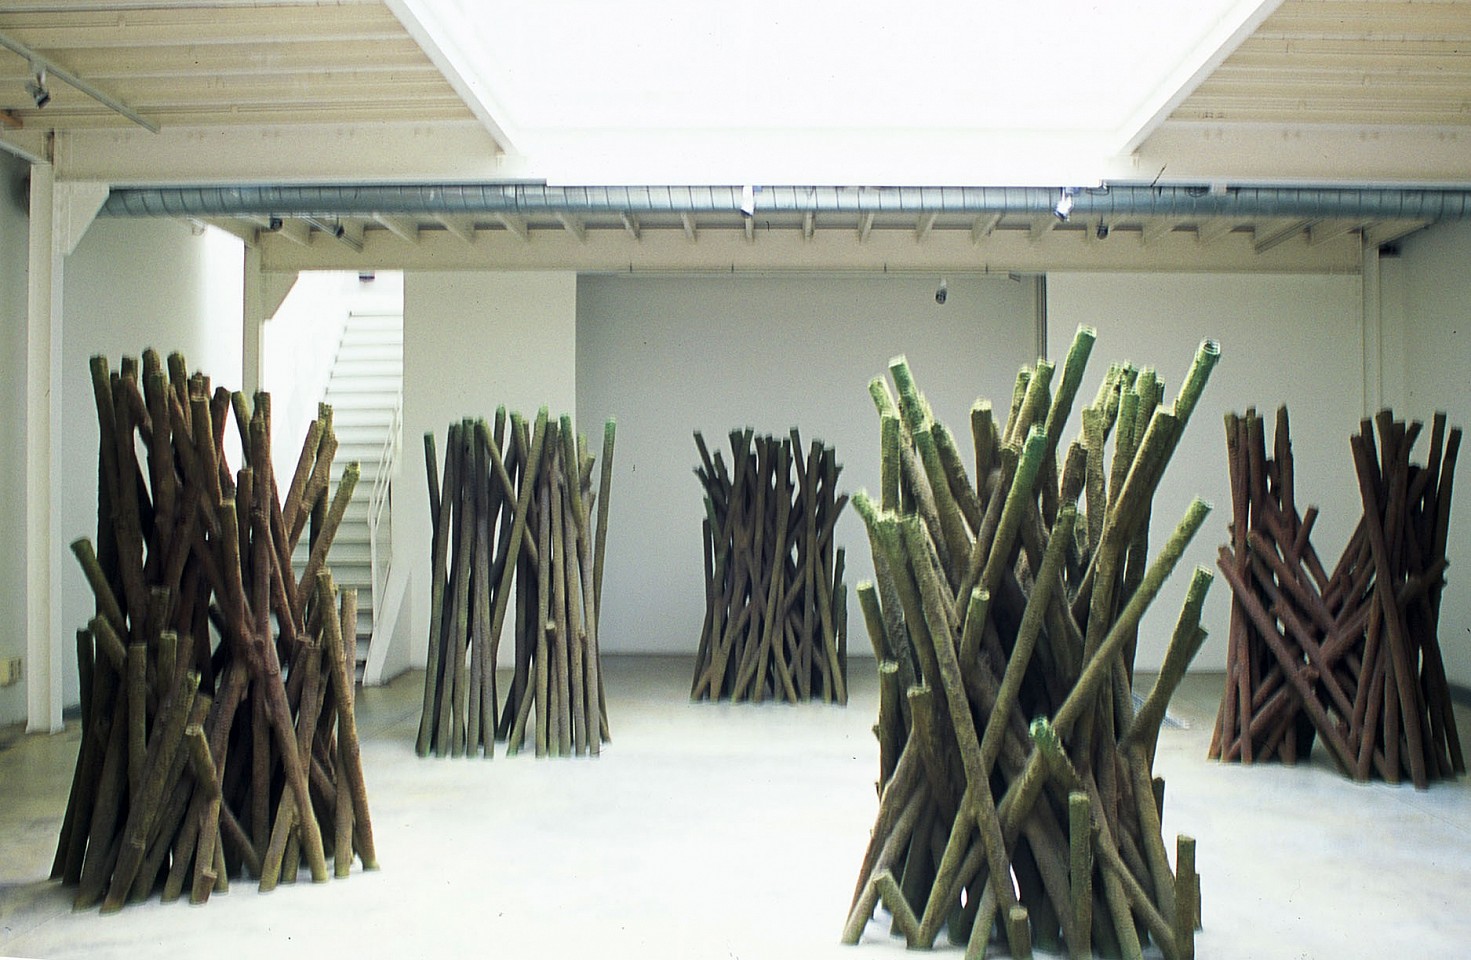 François Daireaux
Formite, 2002
polyester resin, florale foam, 5 pieces: 73.6 x 43.3 x 31.5 inches each